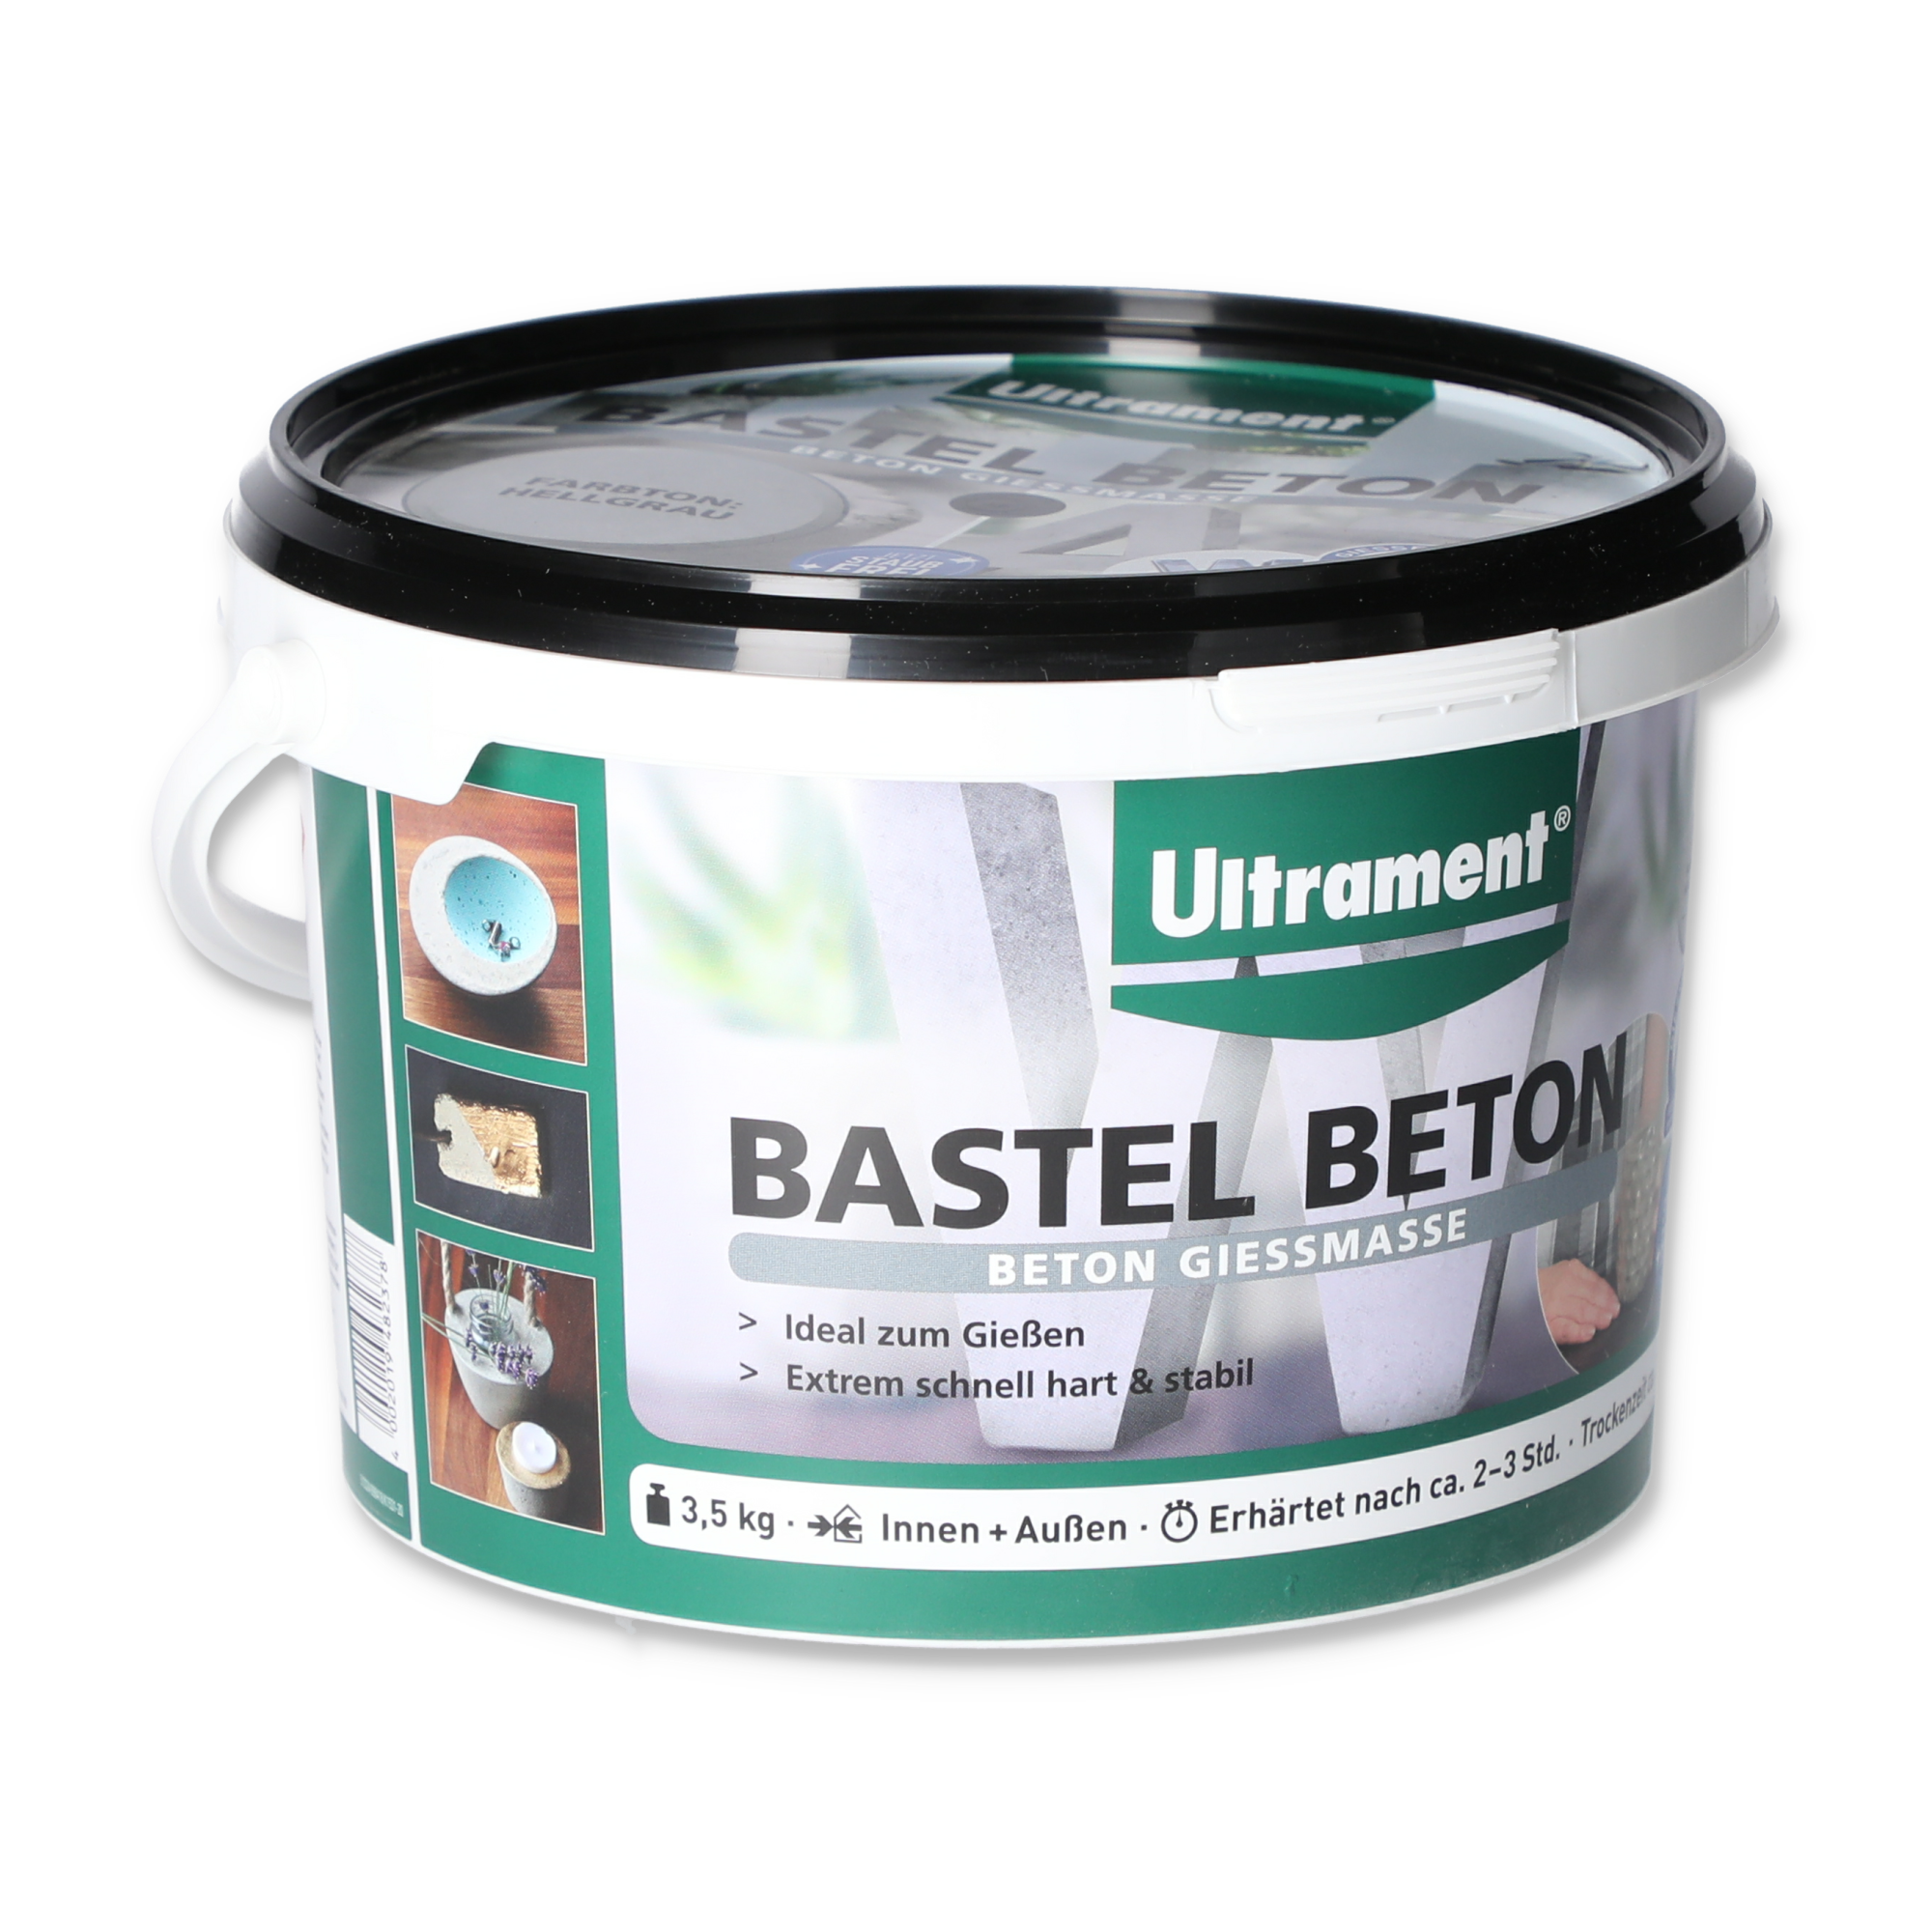 Bastel-Beton 3,5 kg + product picture